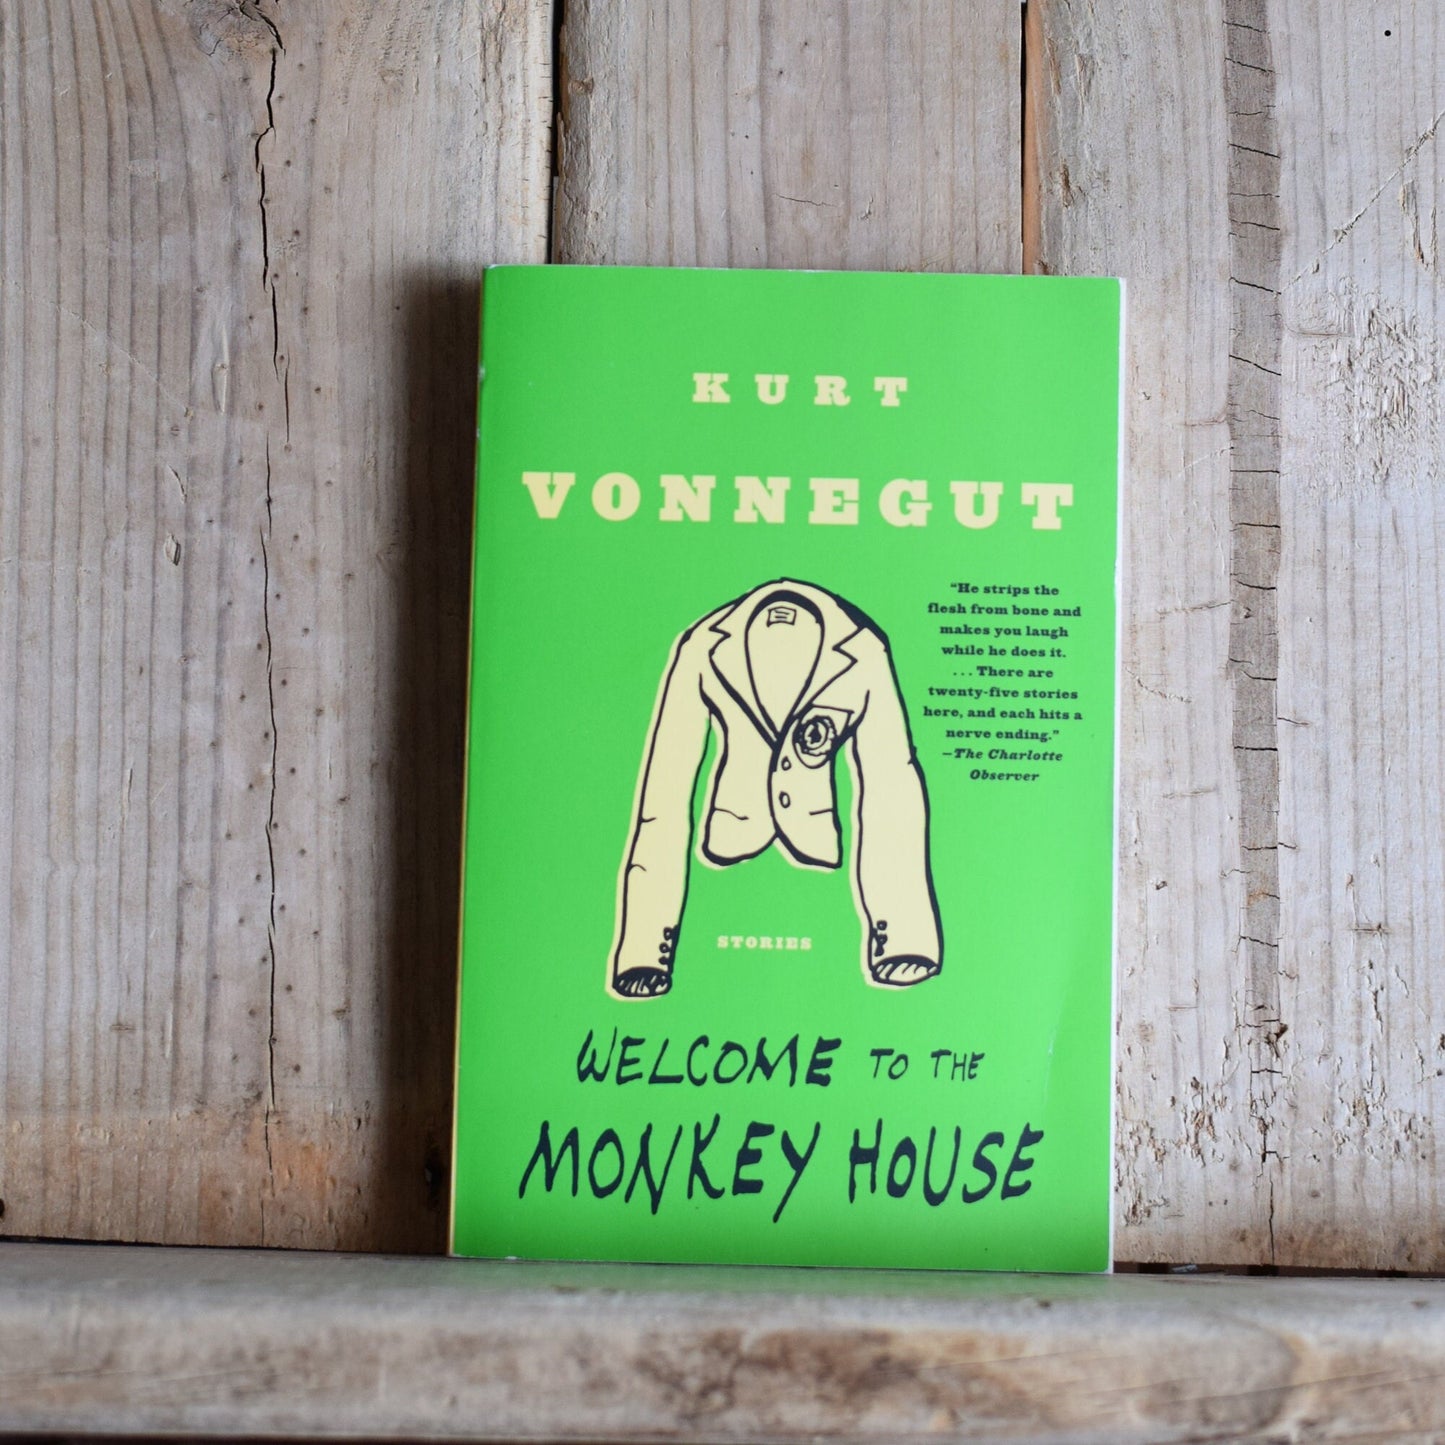 Vintage Fiction Paperback Novel: Kurt Vonnegut Jr. - Welcome to the Monkey House